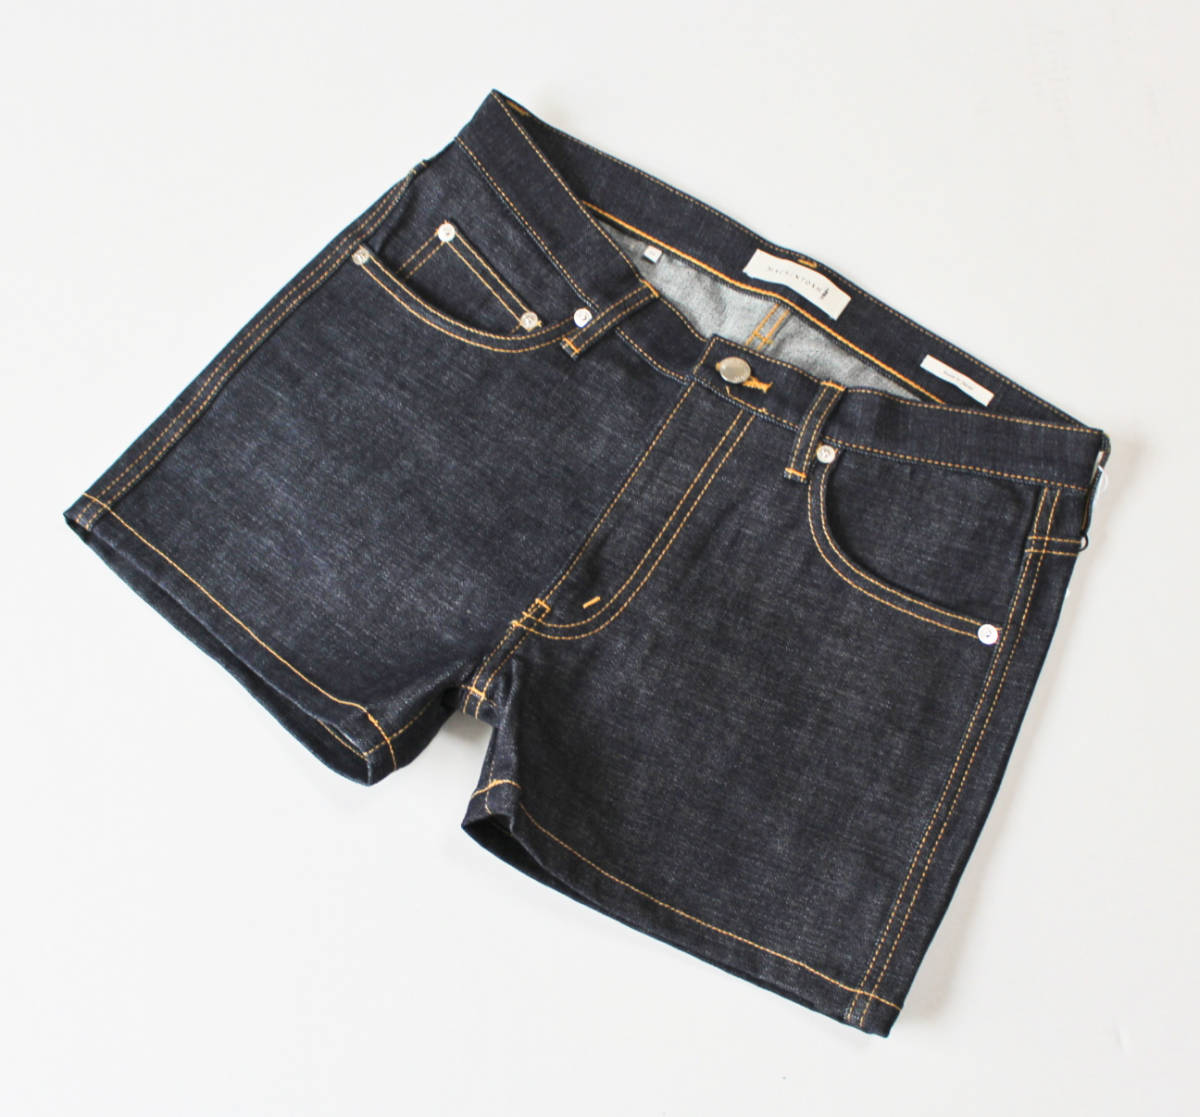 {MACKINTOSH Macintosh } new goods regular price 20,900 jpy fine quality Japan production 5 pocket Denim short pants easy 26(W80cm)A6074